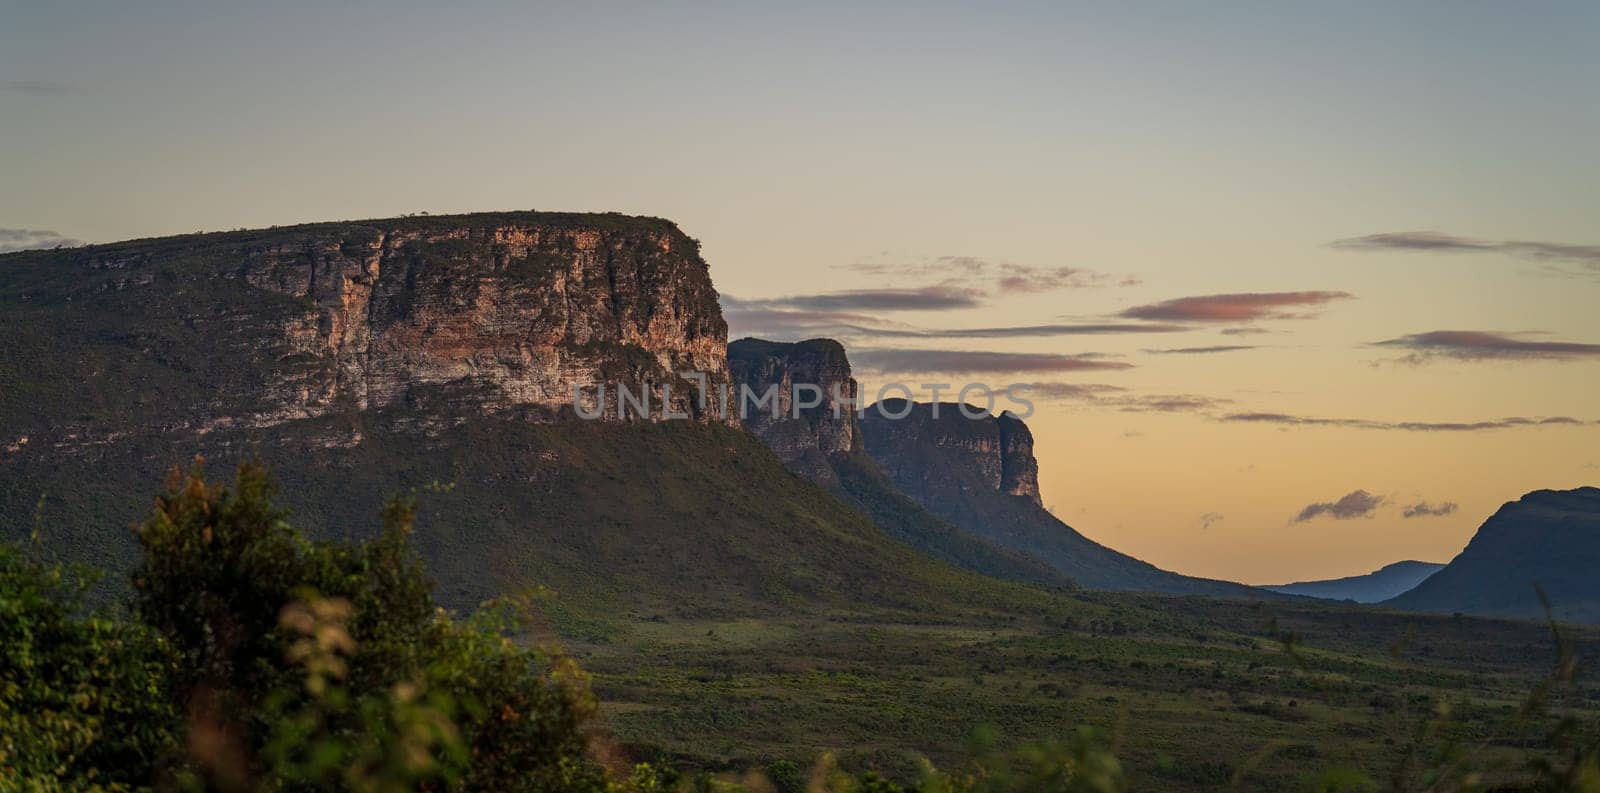 Majestic Cliffs at Sunrise in Lush Wilderness Landscape by FerradalFCG